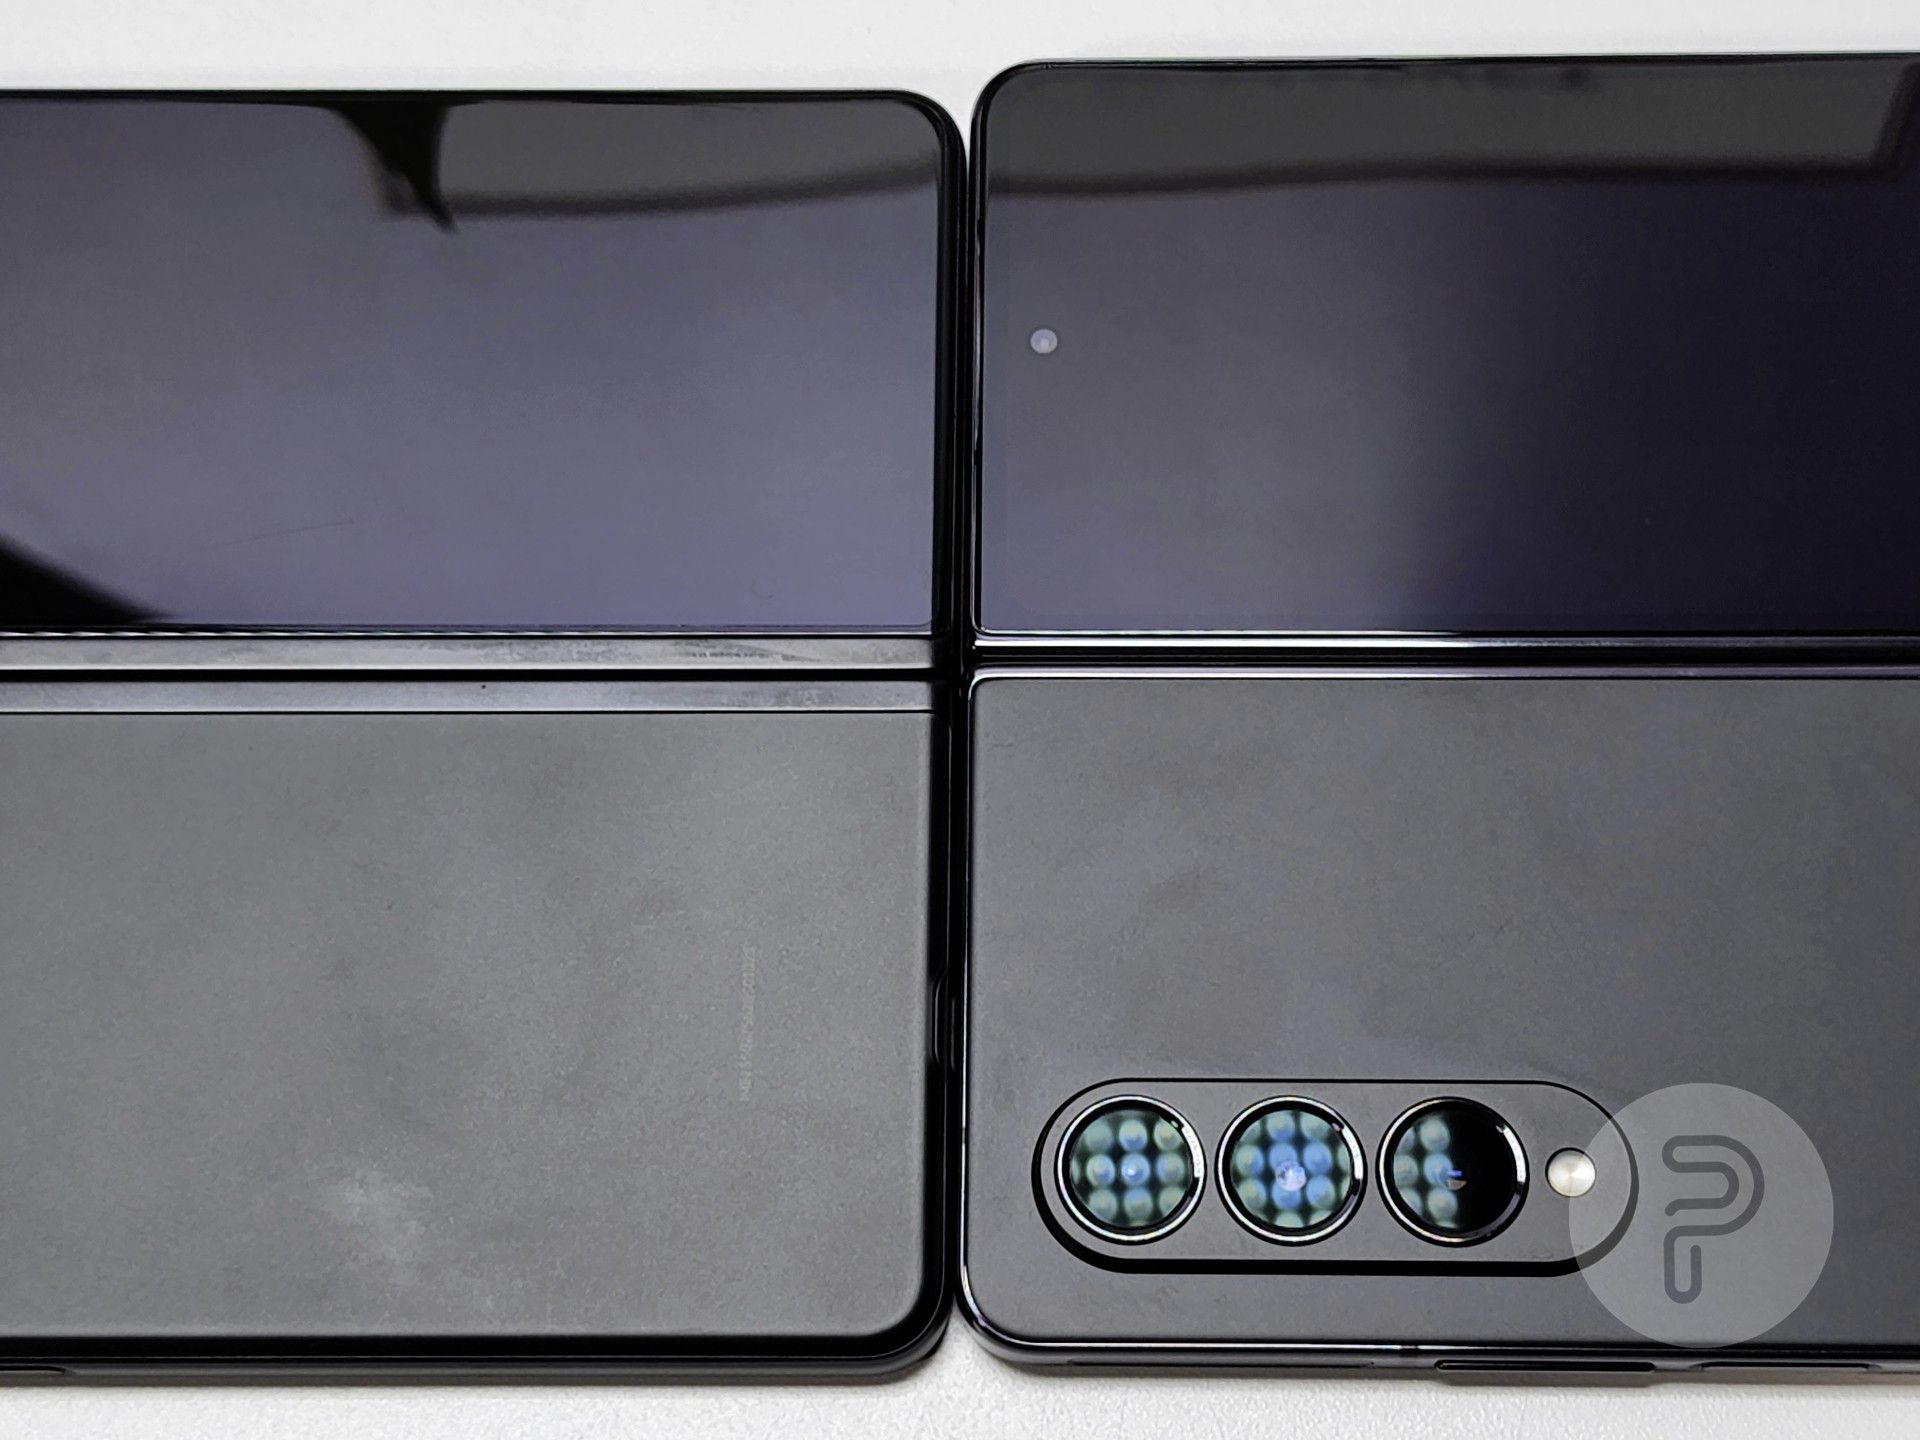 Samsung Galaxy Z Fold 4 and Z Fold 3 side by side